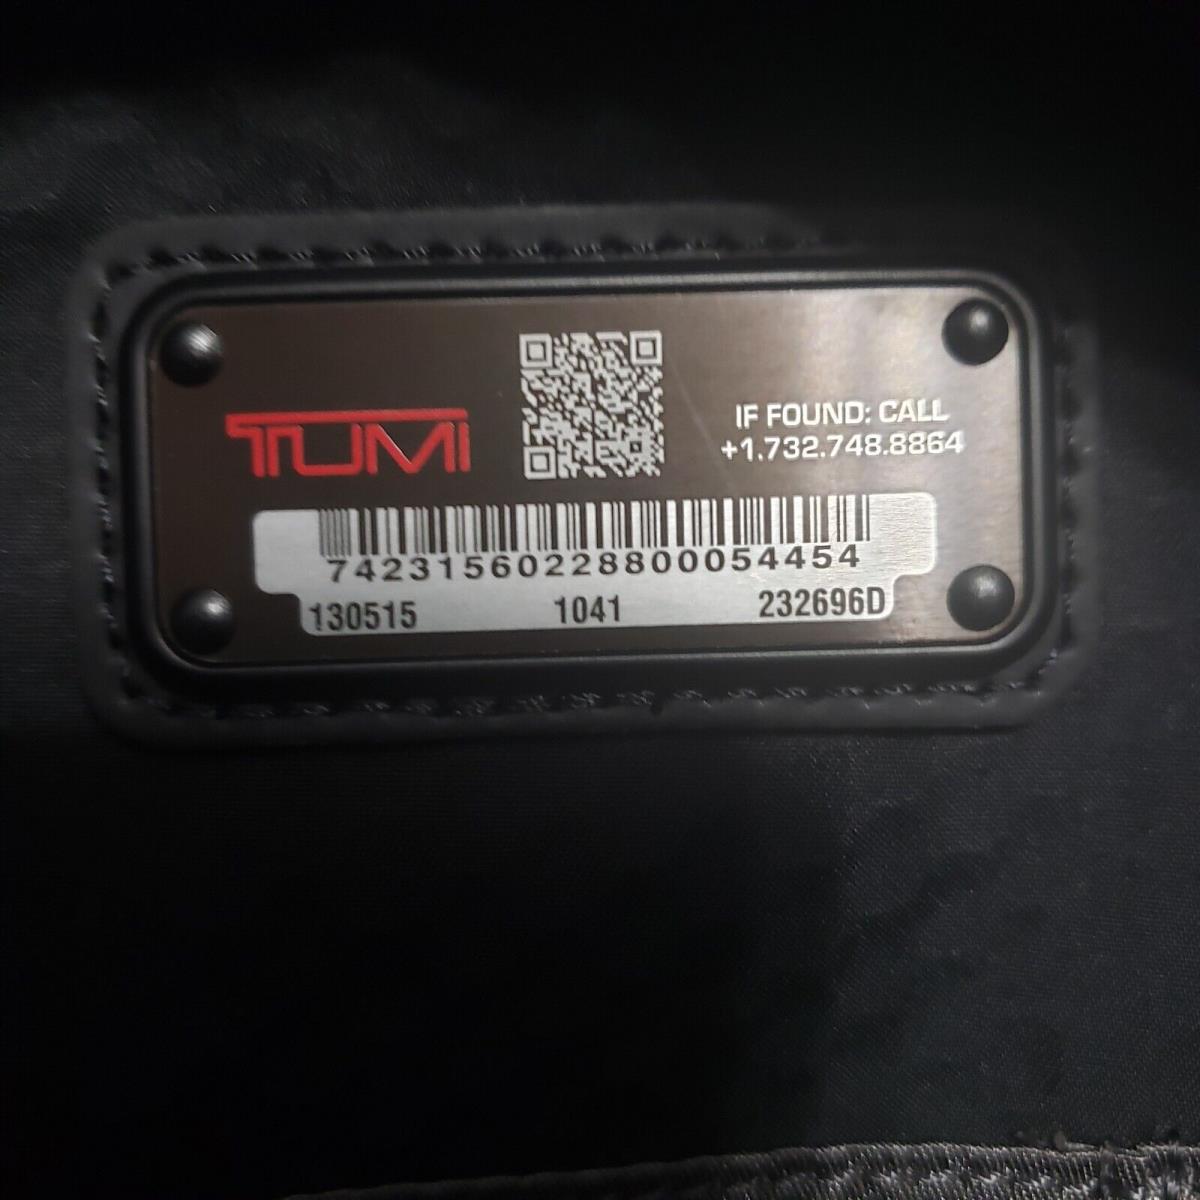 Tumi Jackson Crossbody Black Nylon Leather Unisex Adjustable 742315602288